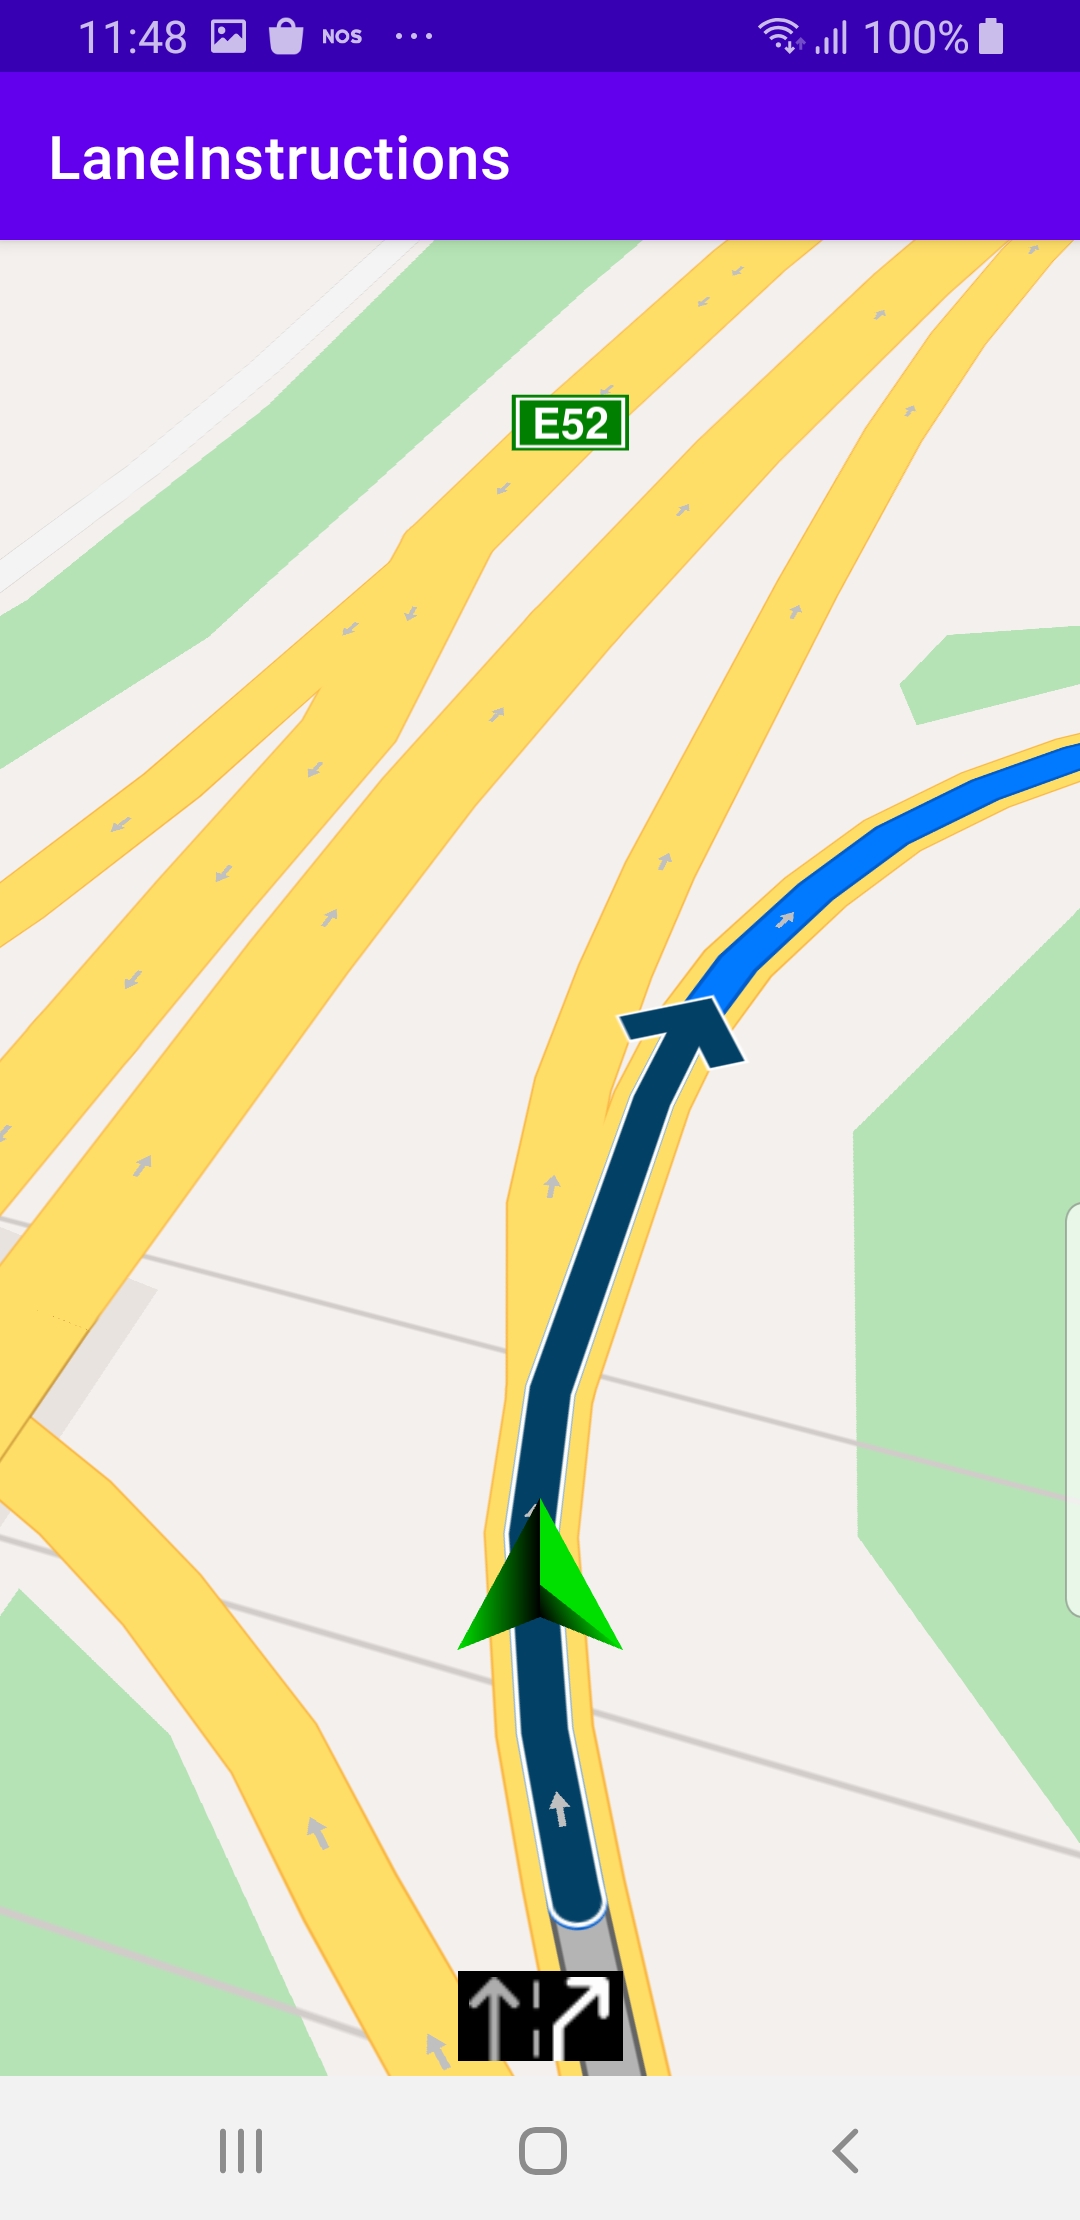 Lane instructions simulated navigation example Android screenshot